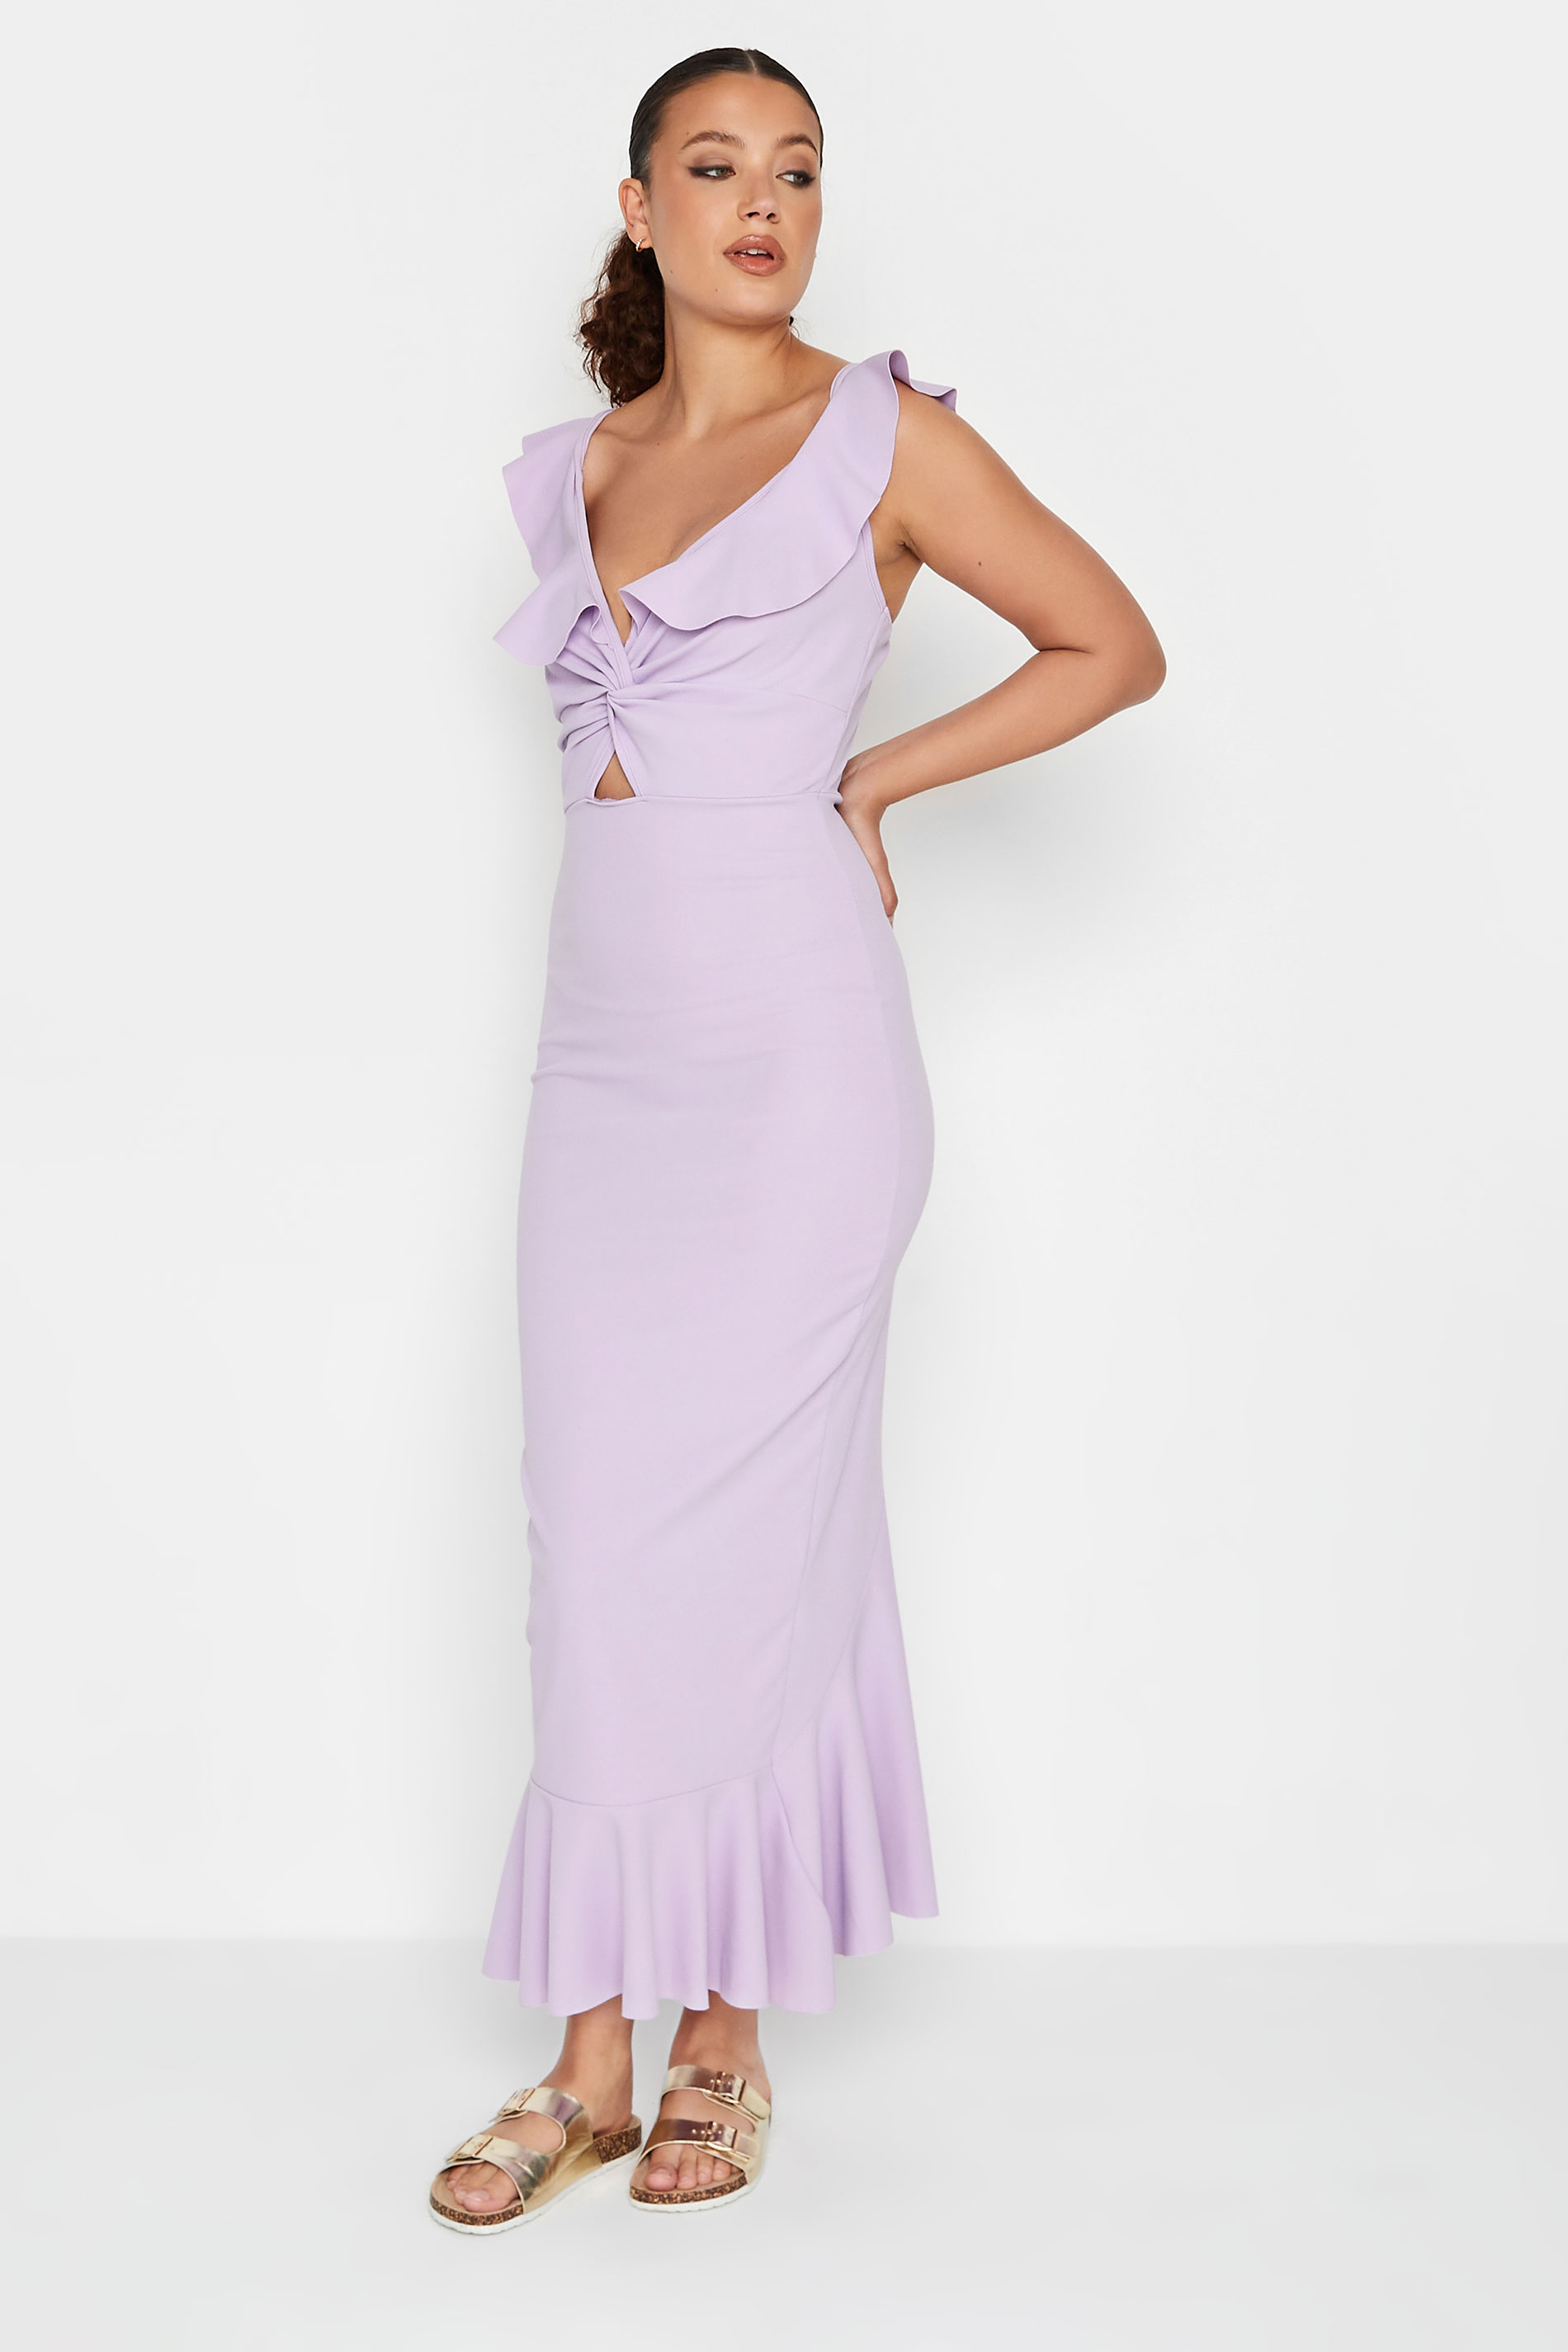 LTS Tall Women's Lilac Purple Cut Out Frill Midaxi Dress | Long Tall Sally 1